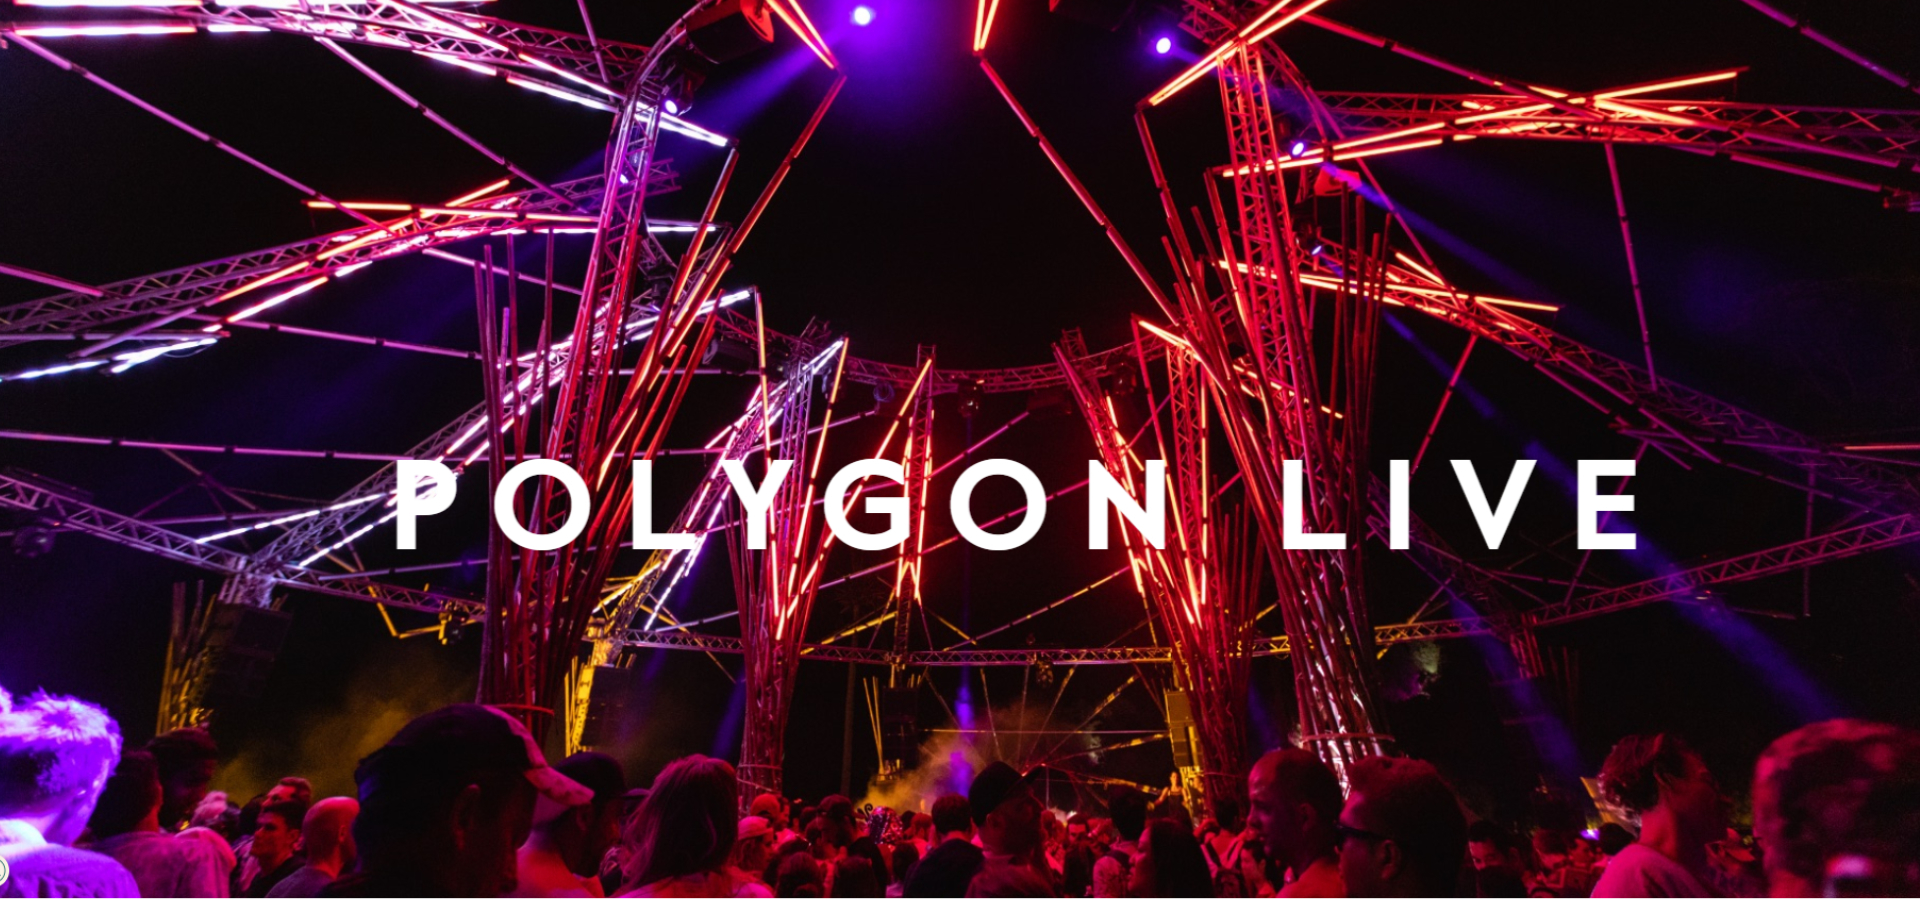 Polygon Live at Wonderfruit Festival